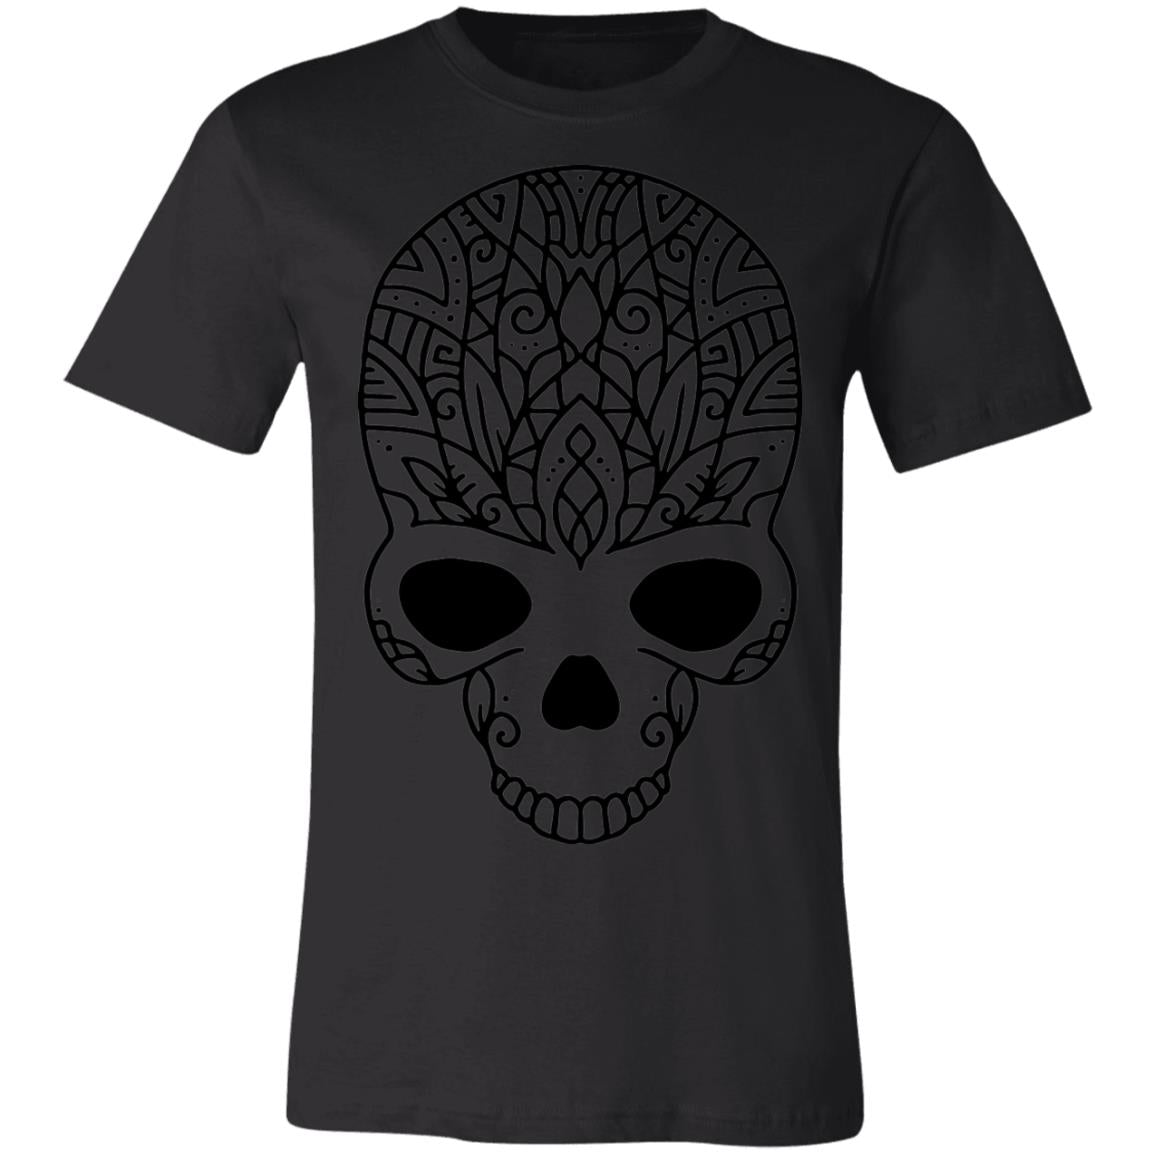 Skull 61 Santa Muerte Shirt-Express Your Love Gifts